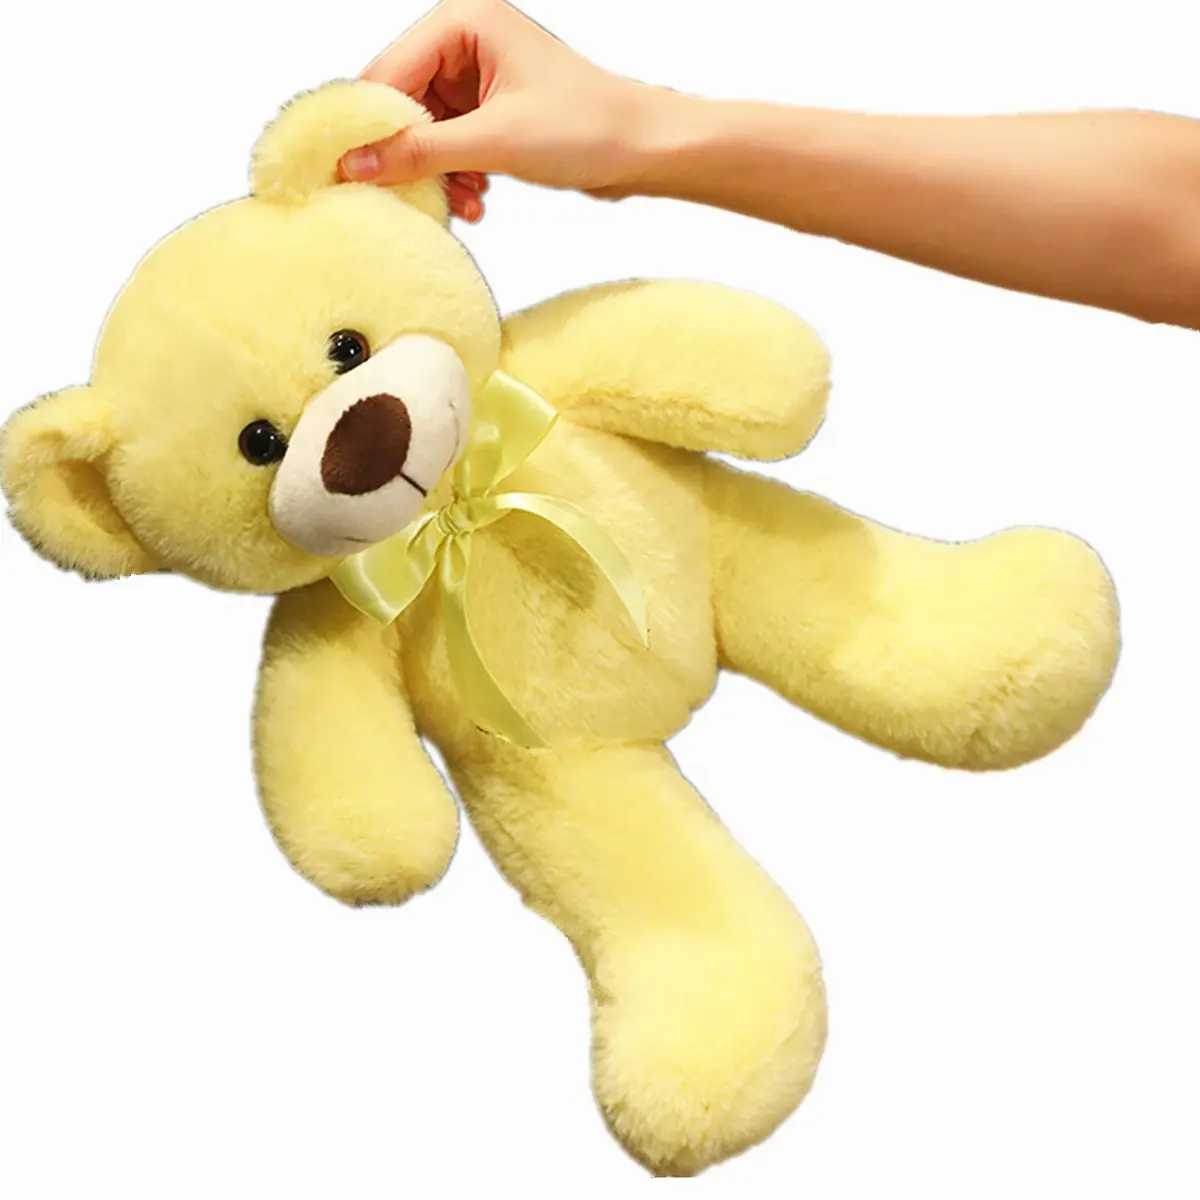 Free sample cheap promotional colorful stuffed teddy bear souvenir gift 35 cm cute plush yellow bear